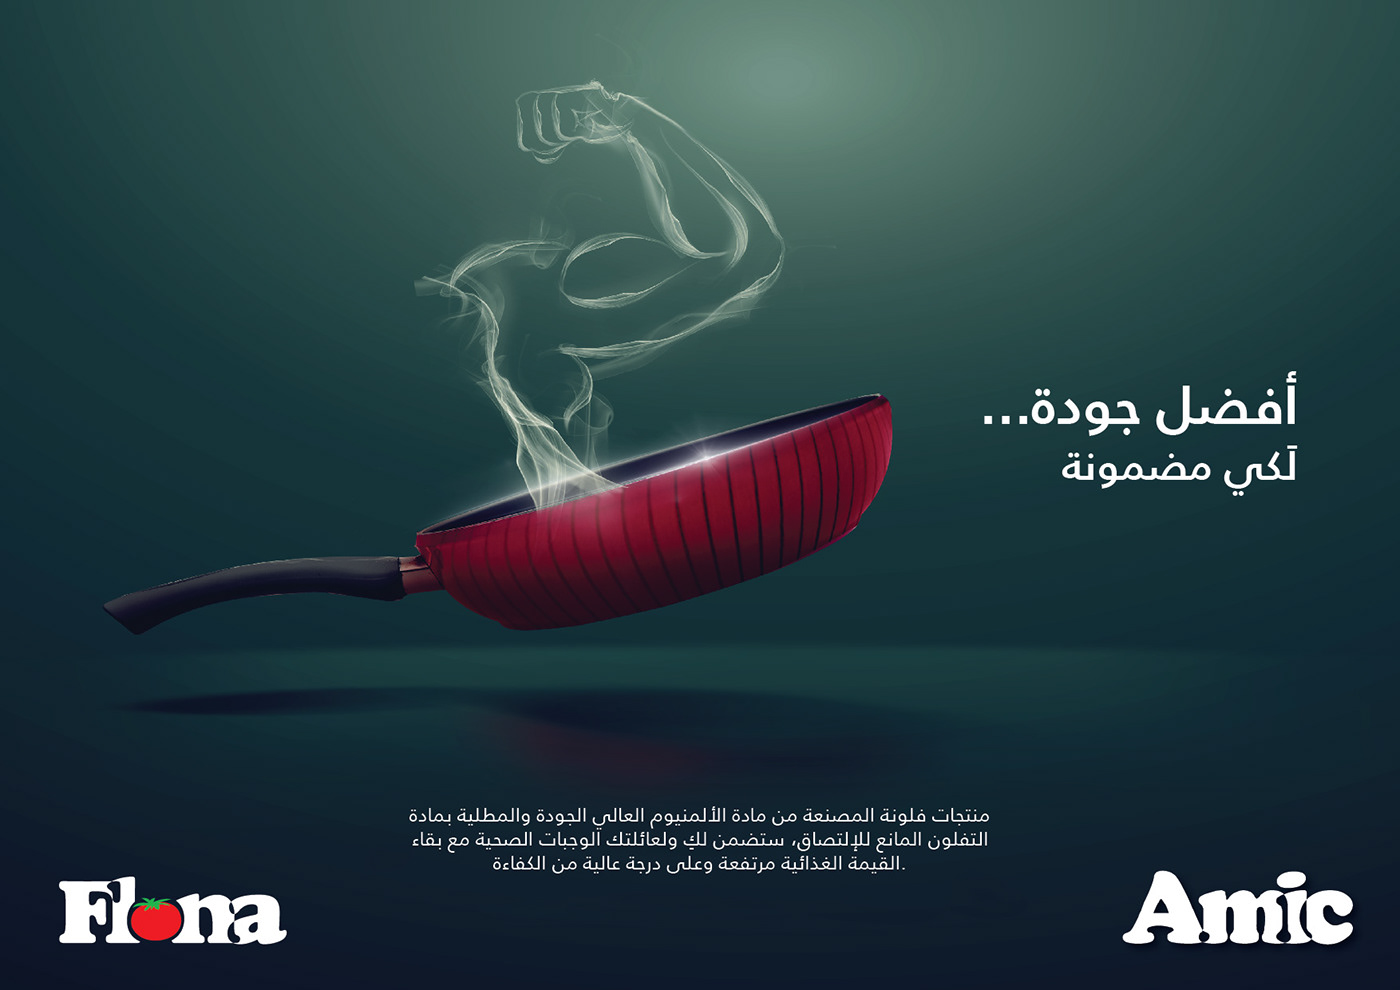 cookware Flona Tefal kitchen amman jordan ads oven cooking Advertising 